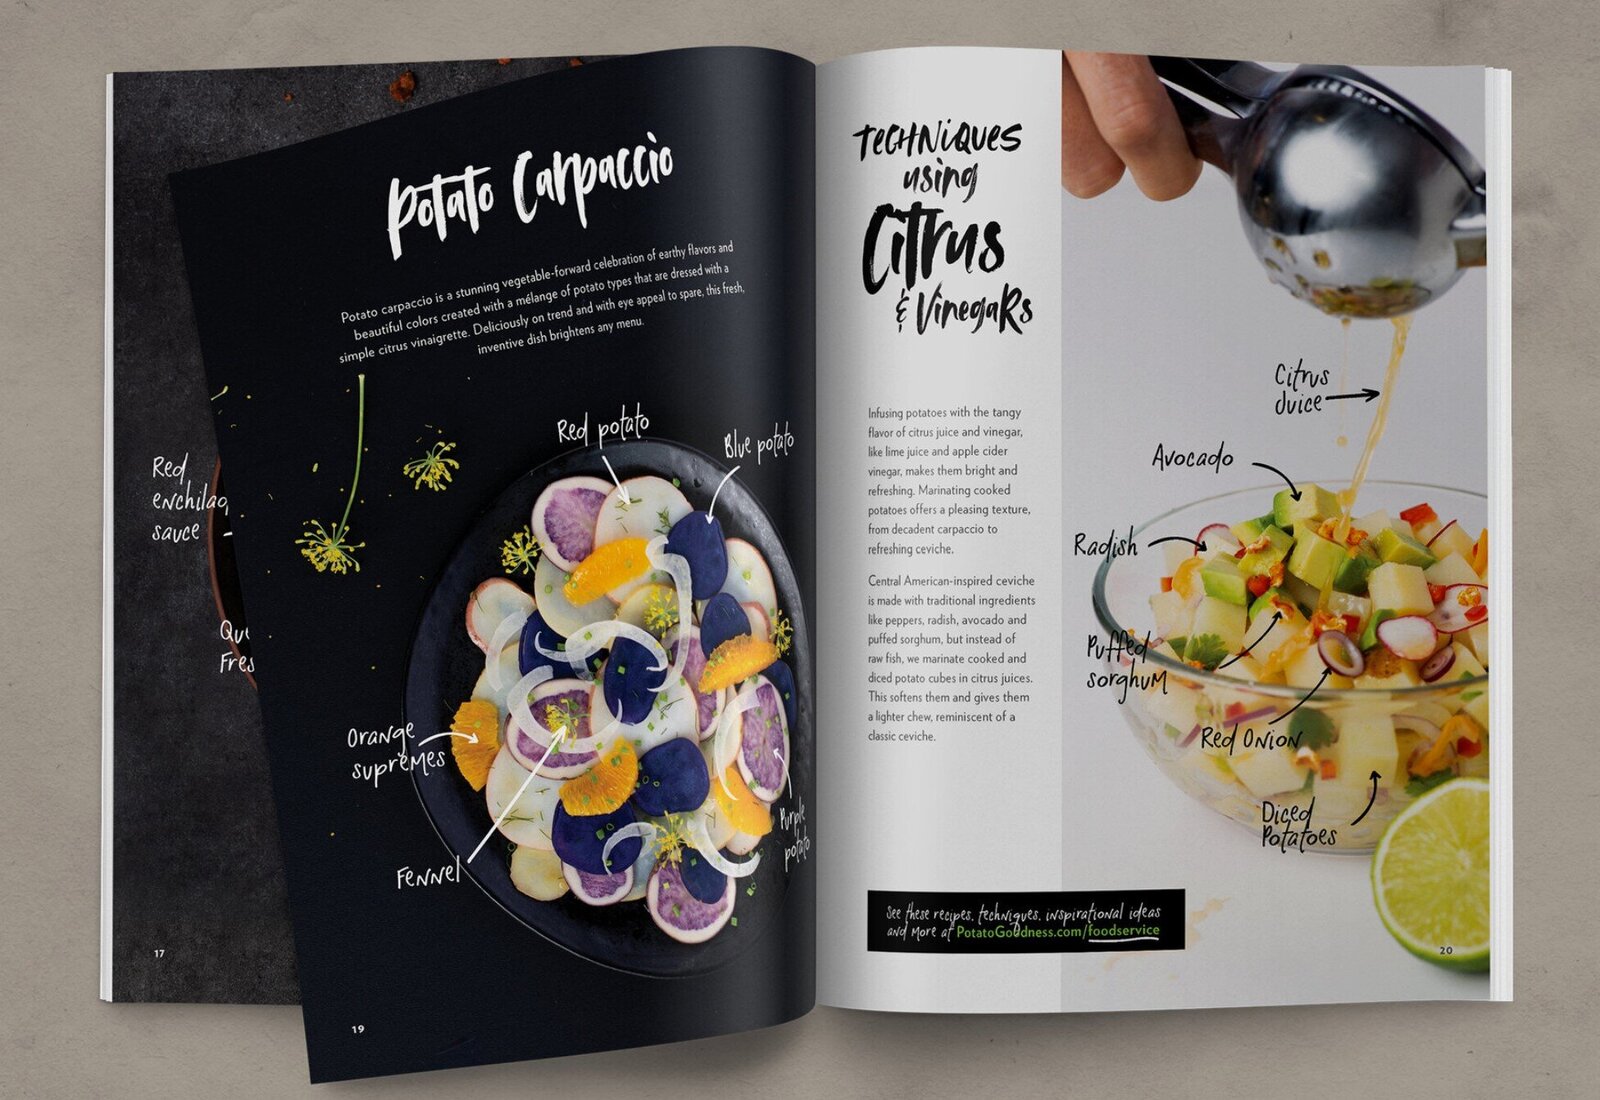 marketing potatoes food photography book